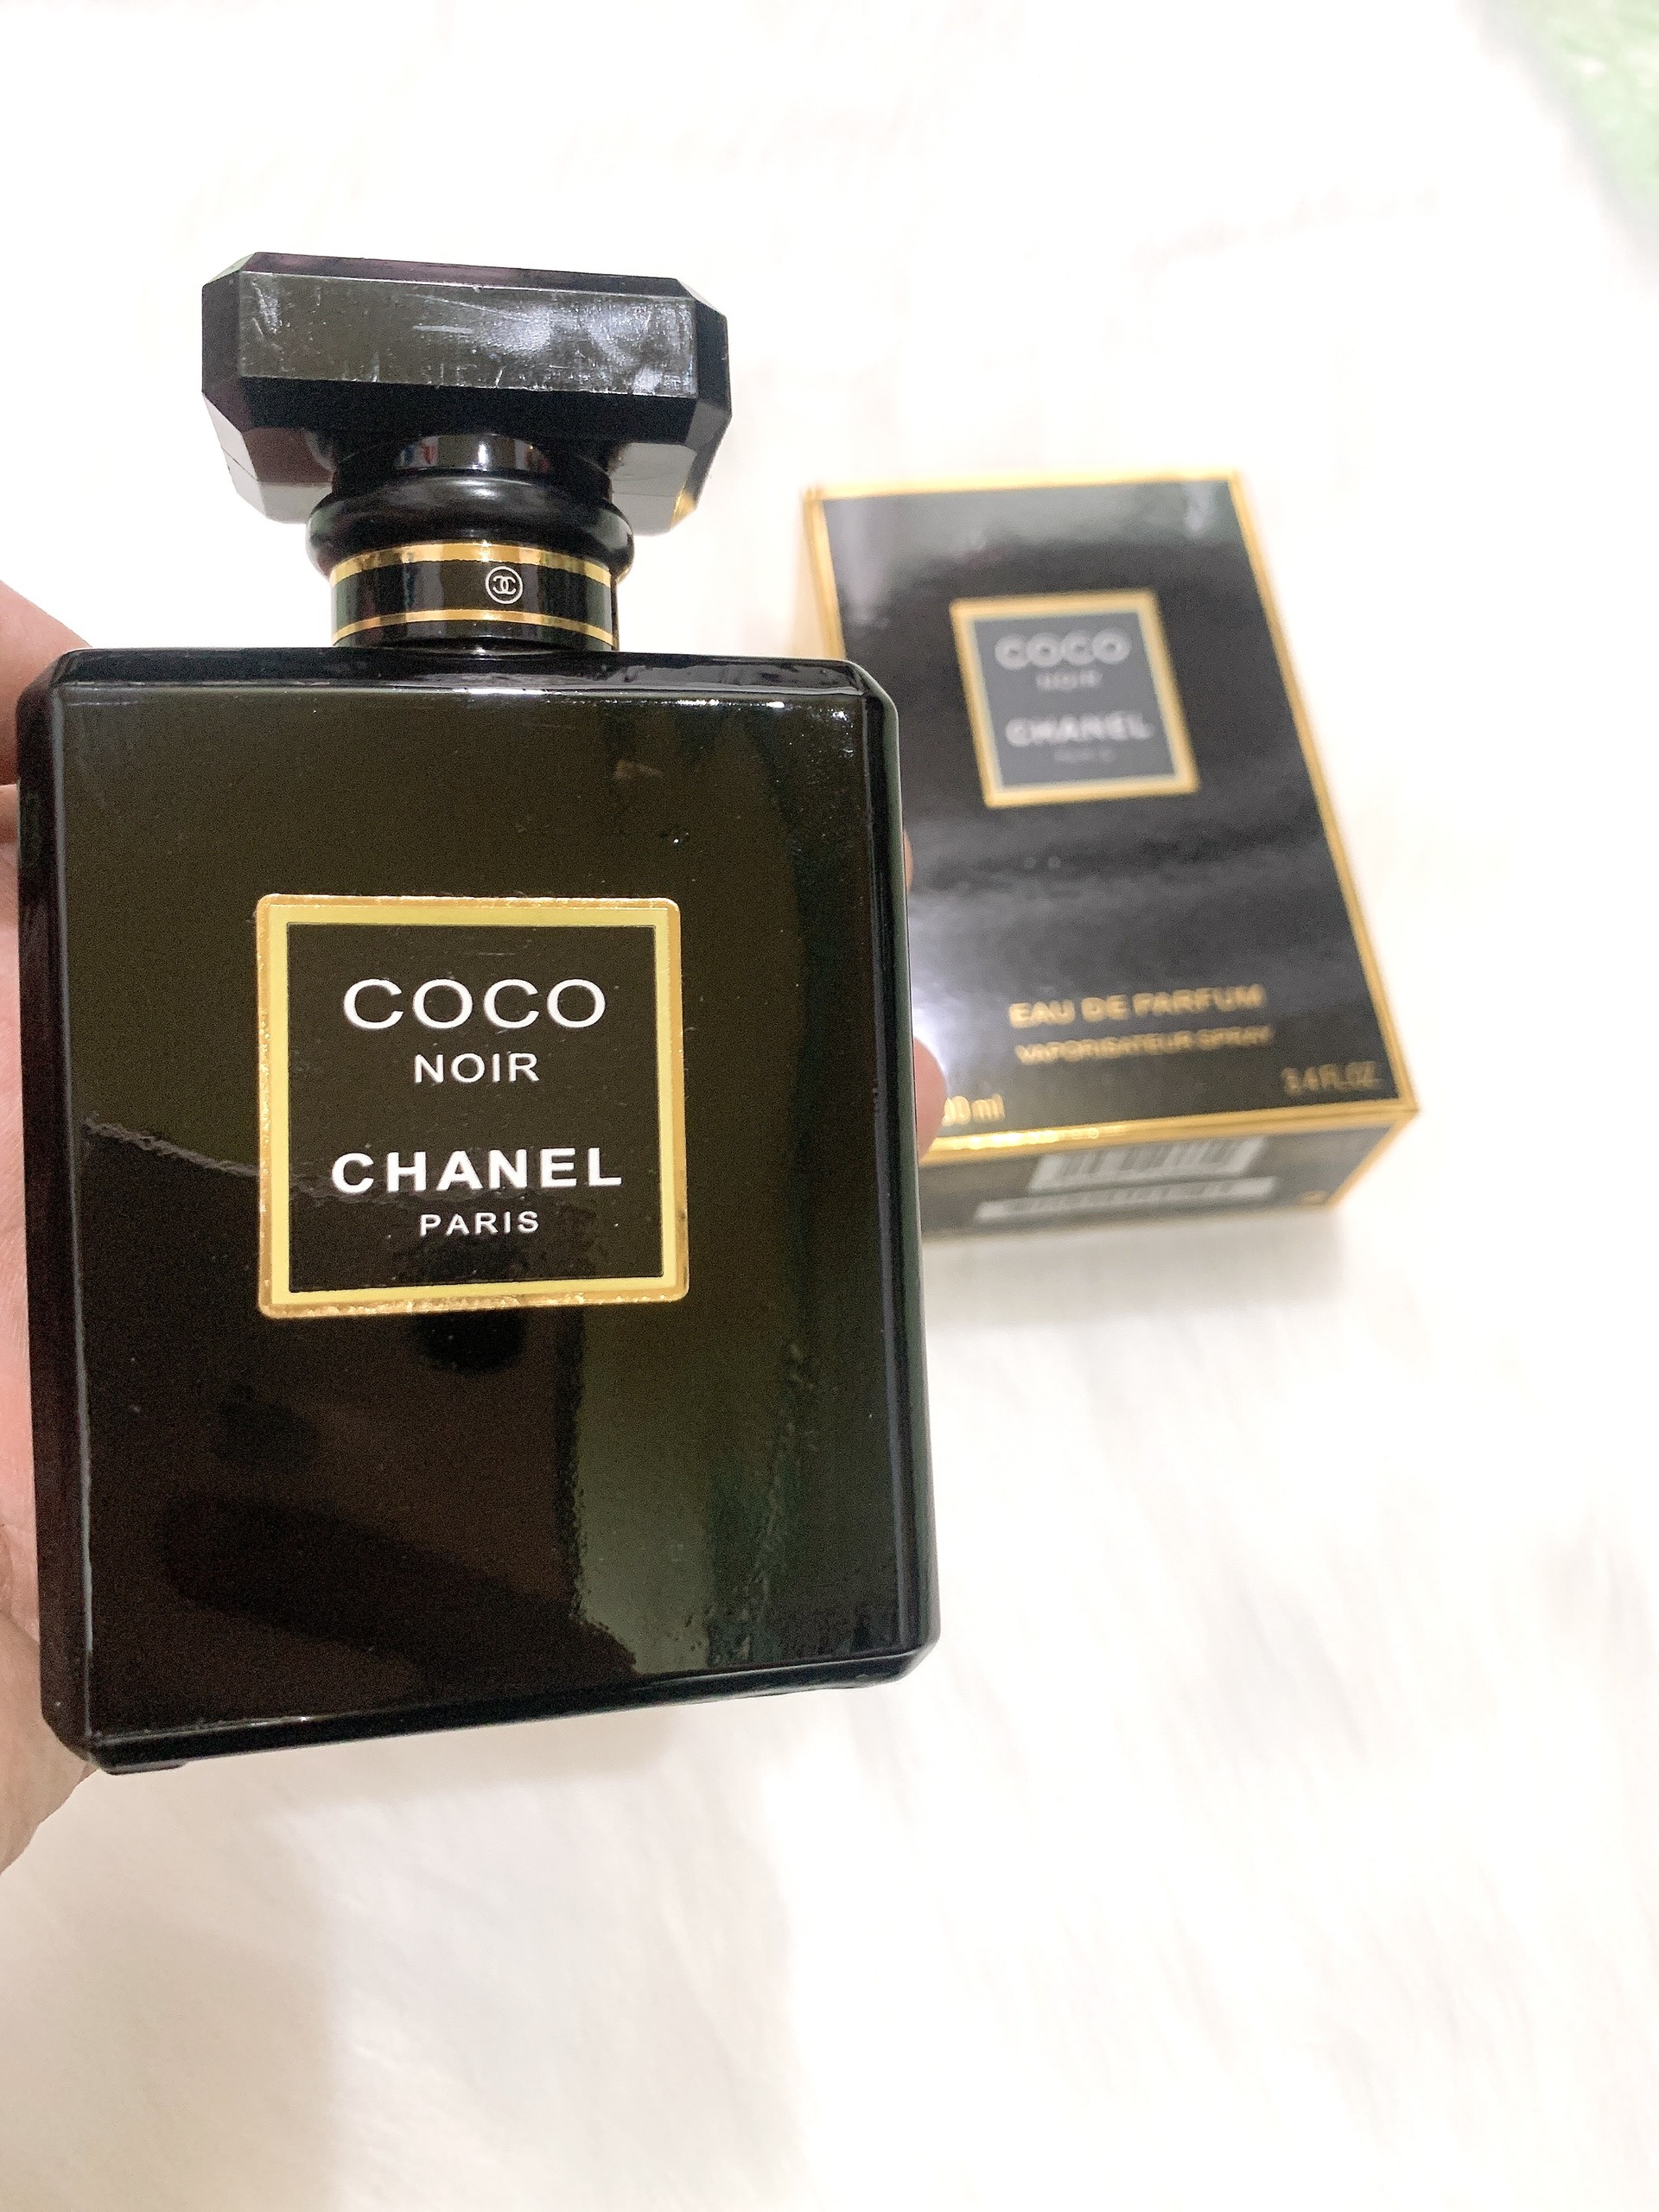 Chiết Chanel Coco Noir Eau De Parfum 10ml  Mỹ phẩm hàng hiệu cao cấp USA  UK  Ali Son Mac